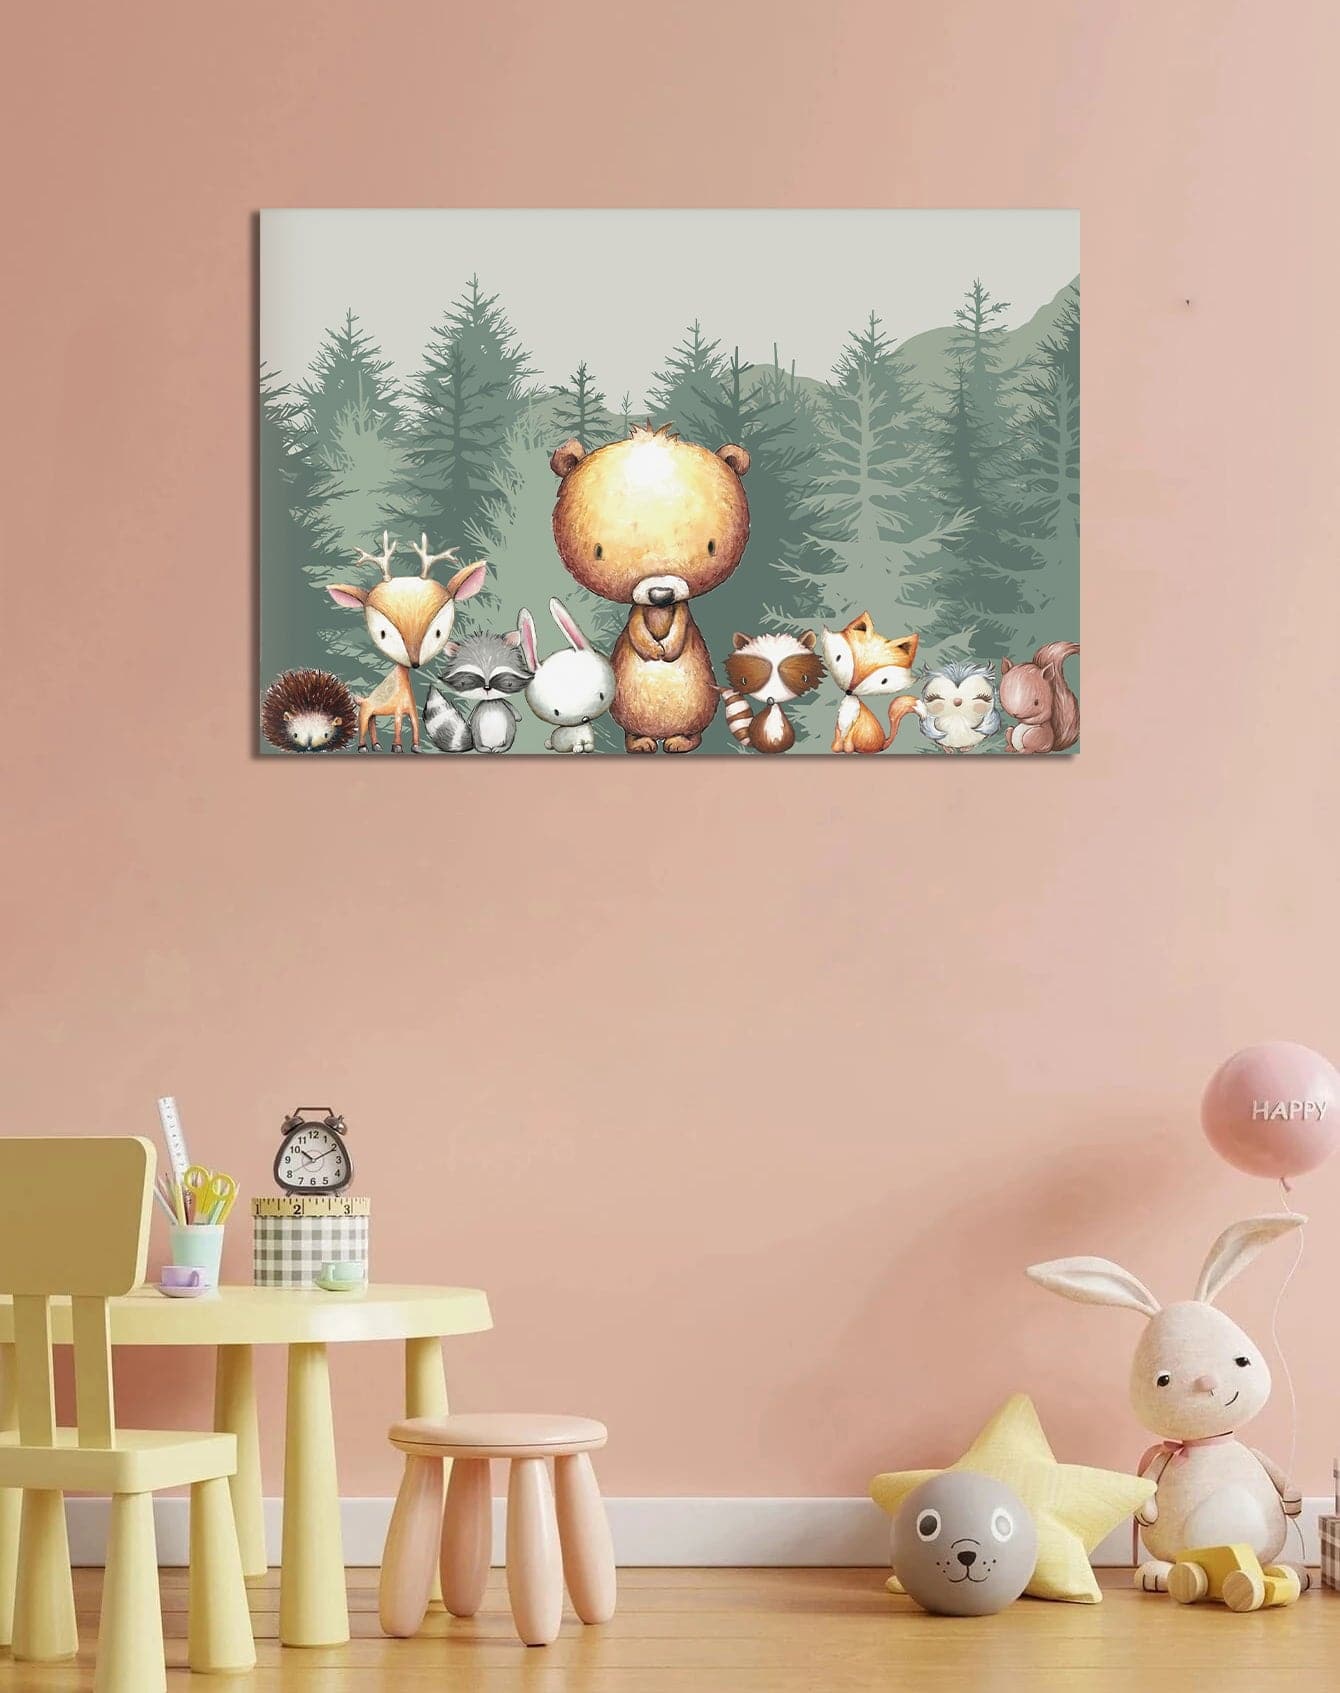 Framed 1 Panel  - Kids Room - Cute Forest Animals